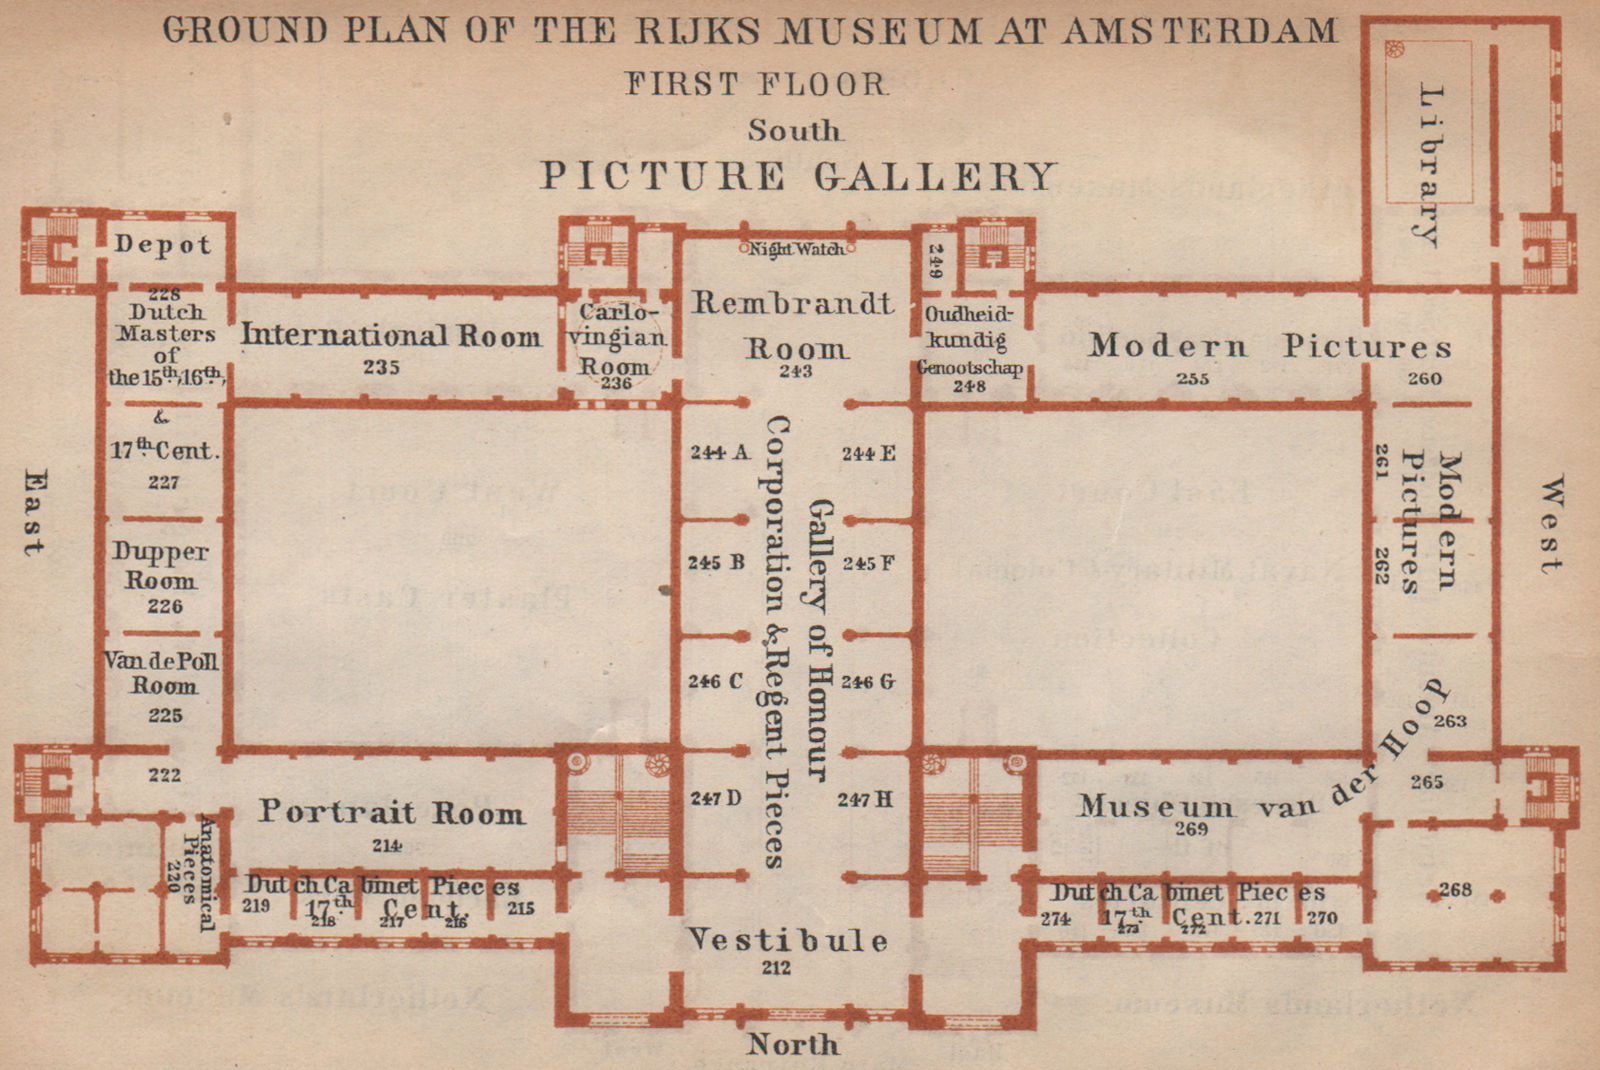 RIJKS MUSEUM first floor plan, Amsterdam. Netherlands kaart. BAEDEKER 1901 map